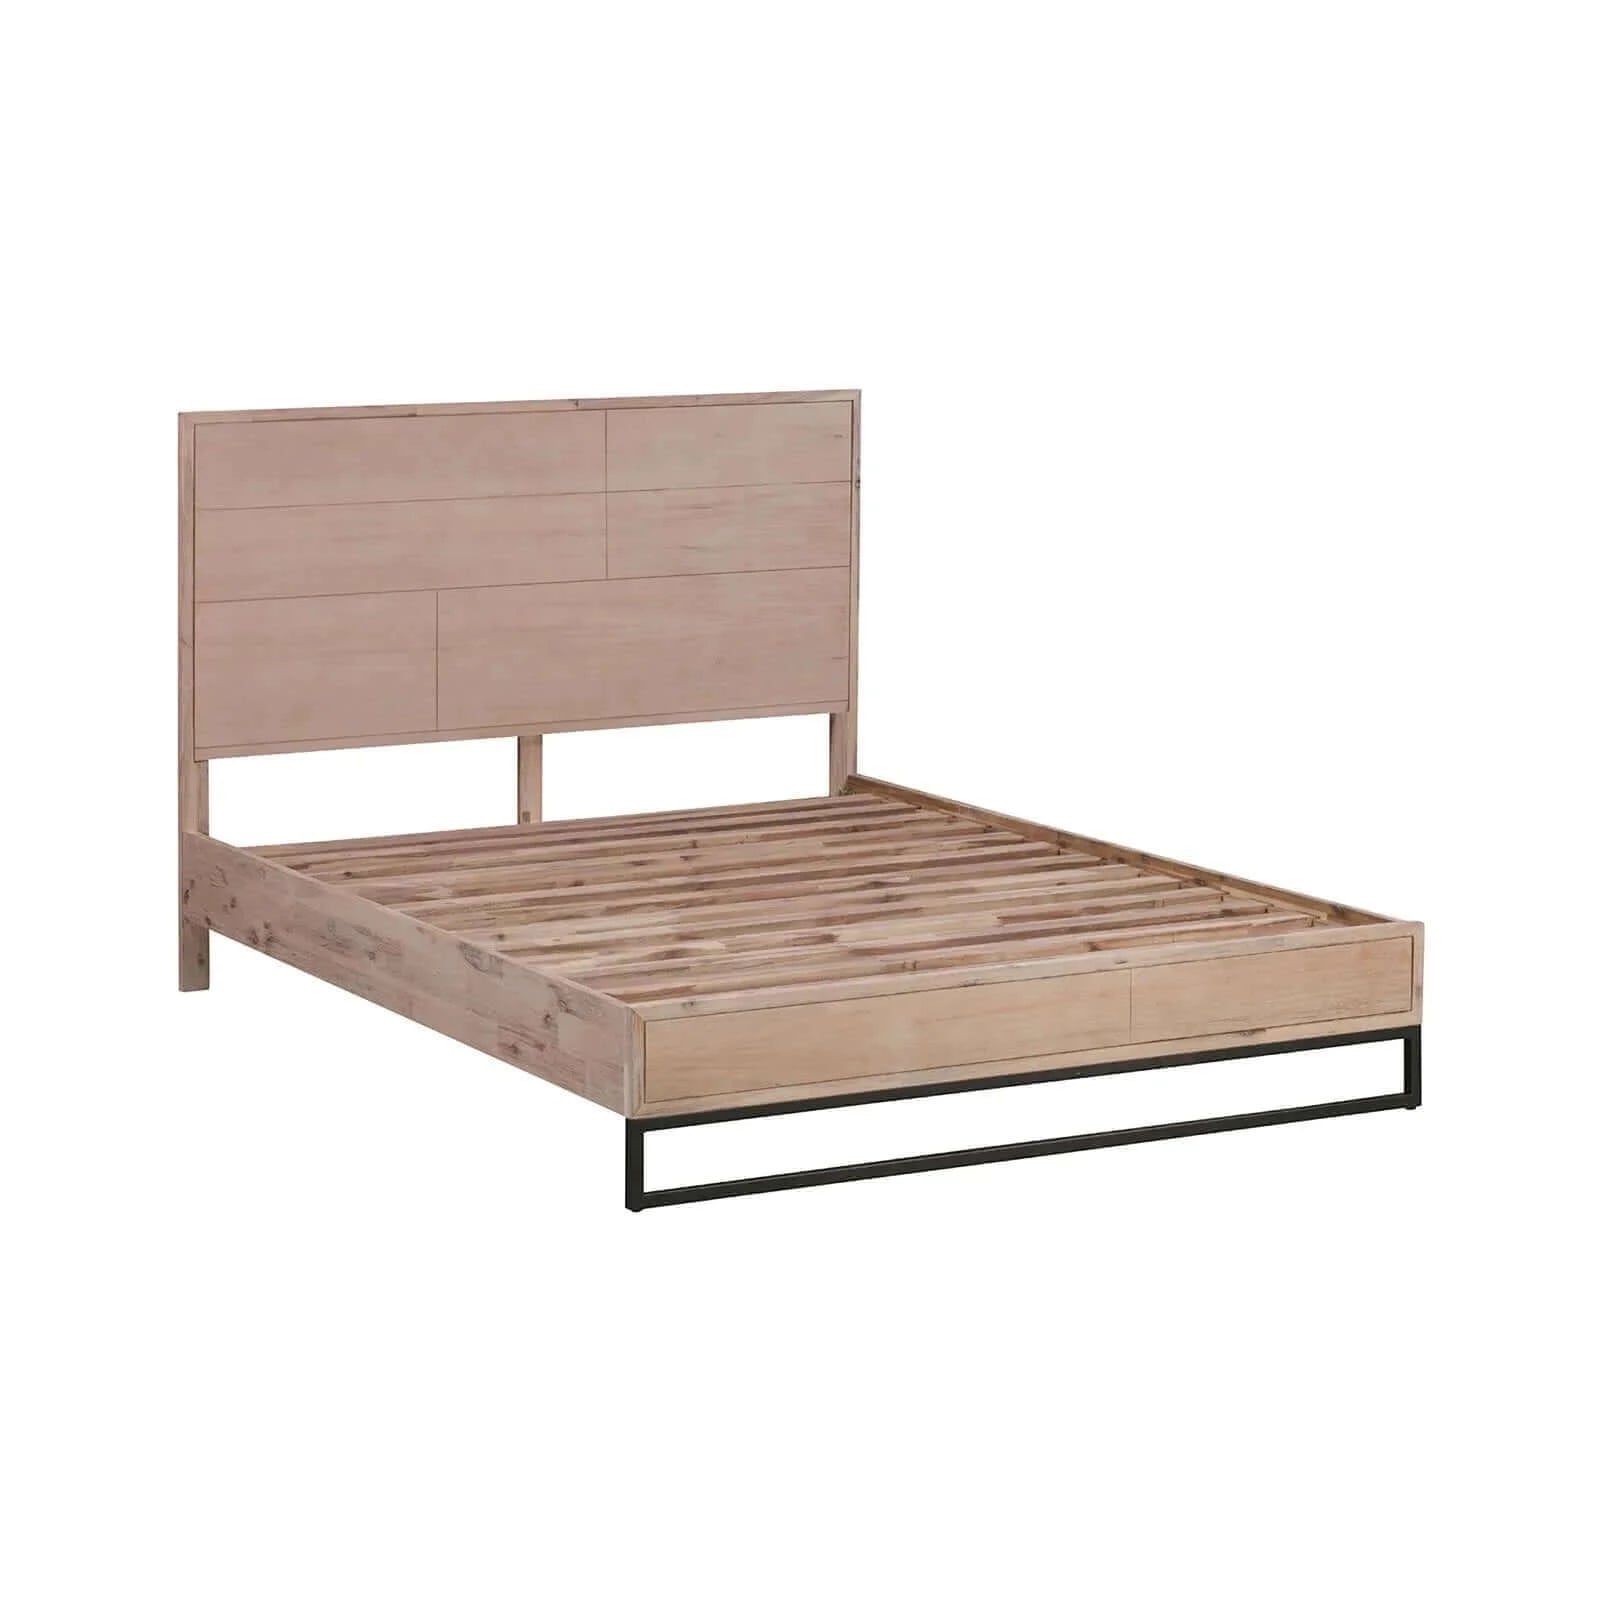 Buy 4 pieces bedroom suite made in solid wood acacia veneered queen size oak colour bed bedside table & dresser - upinteriors-Upinteriors